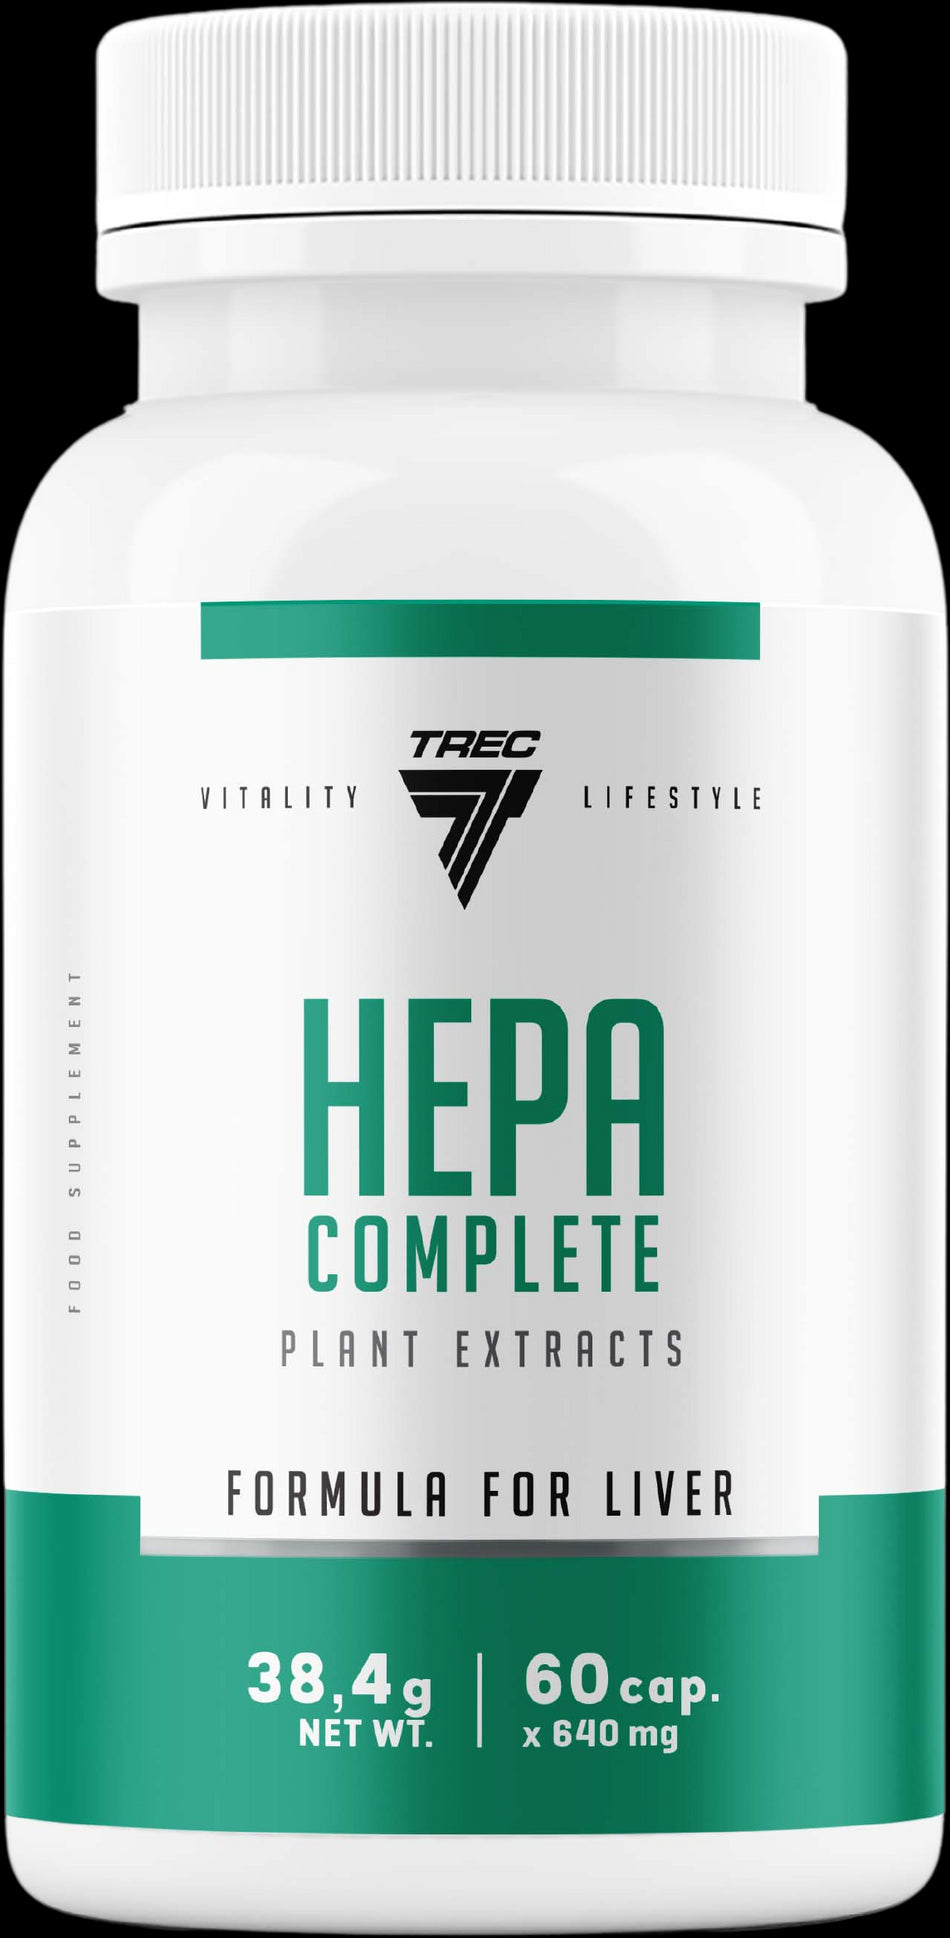 Hepa Complete | Formula for Liver - BadiZdrav.BG